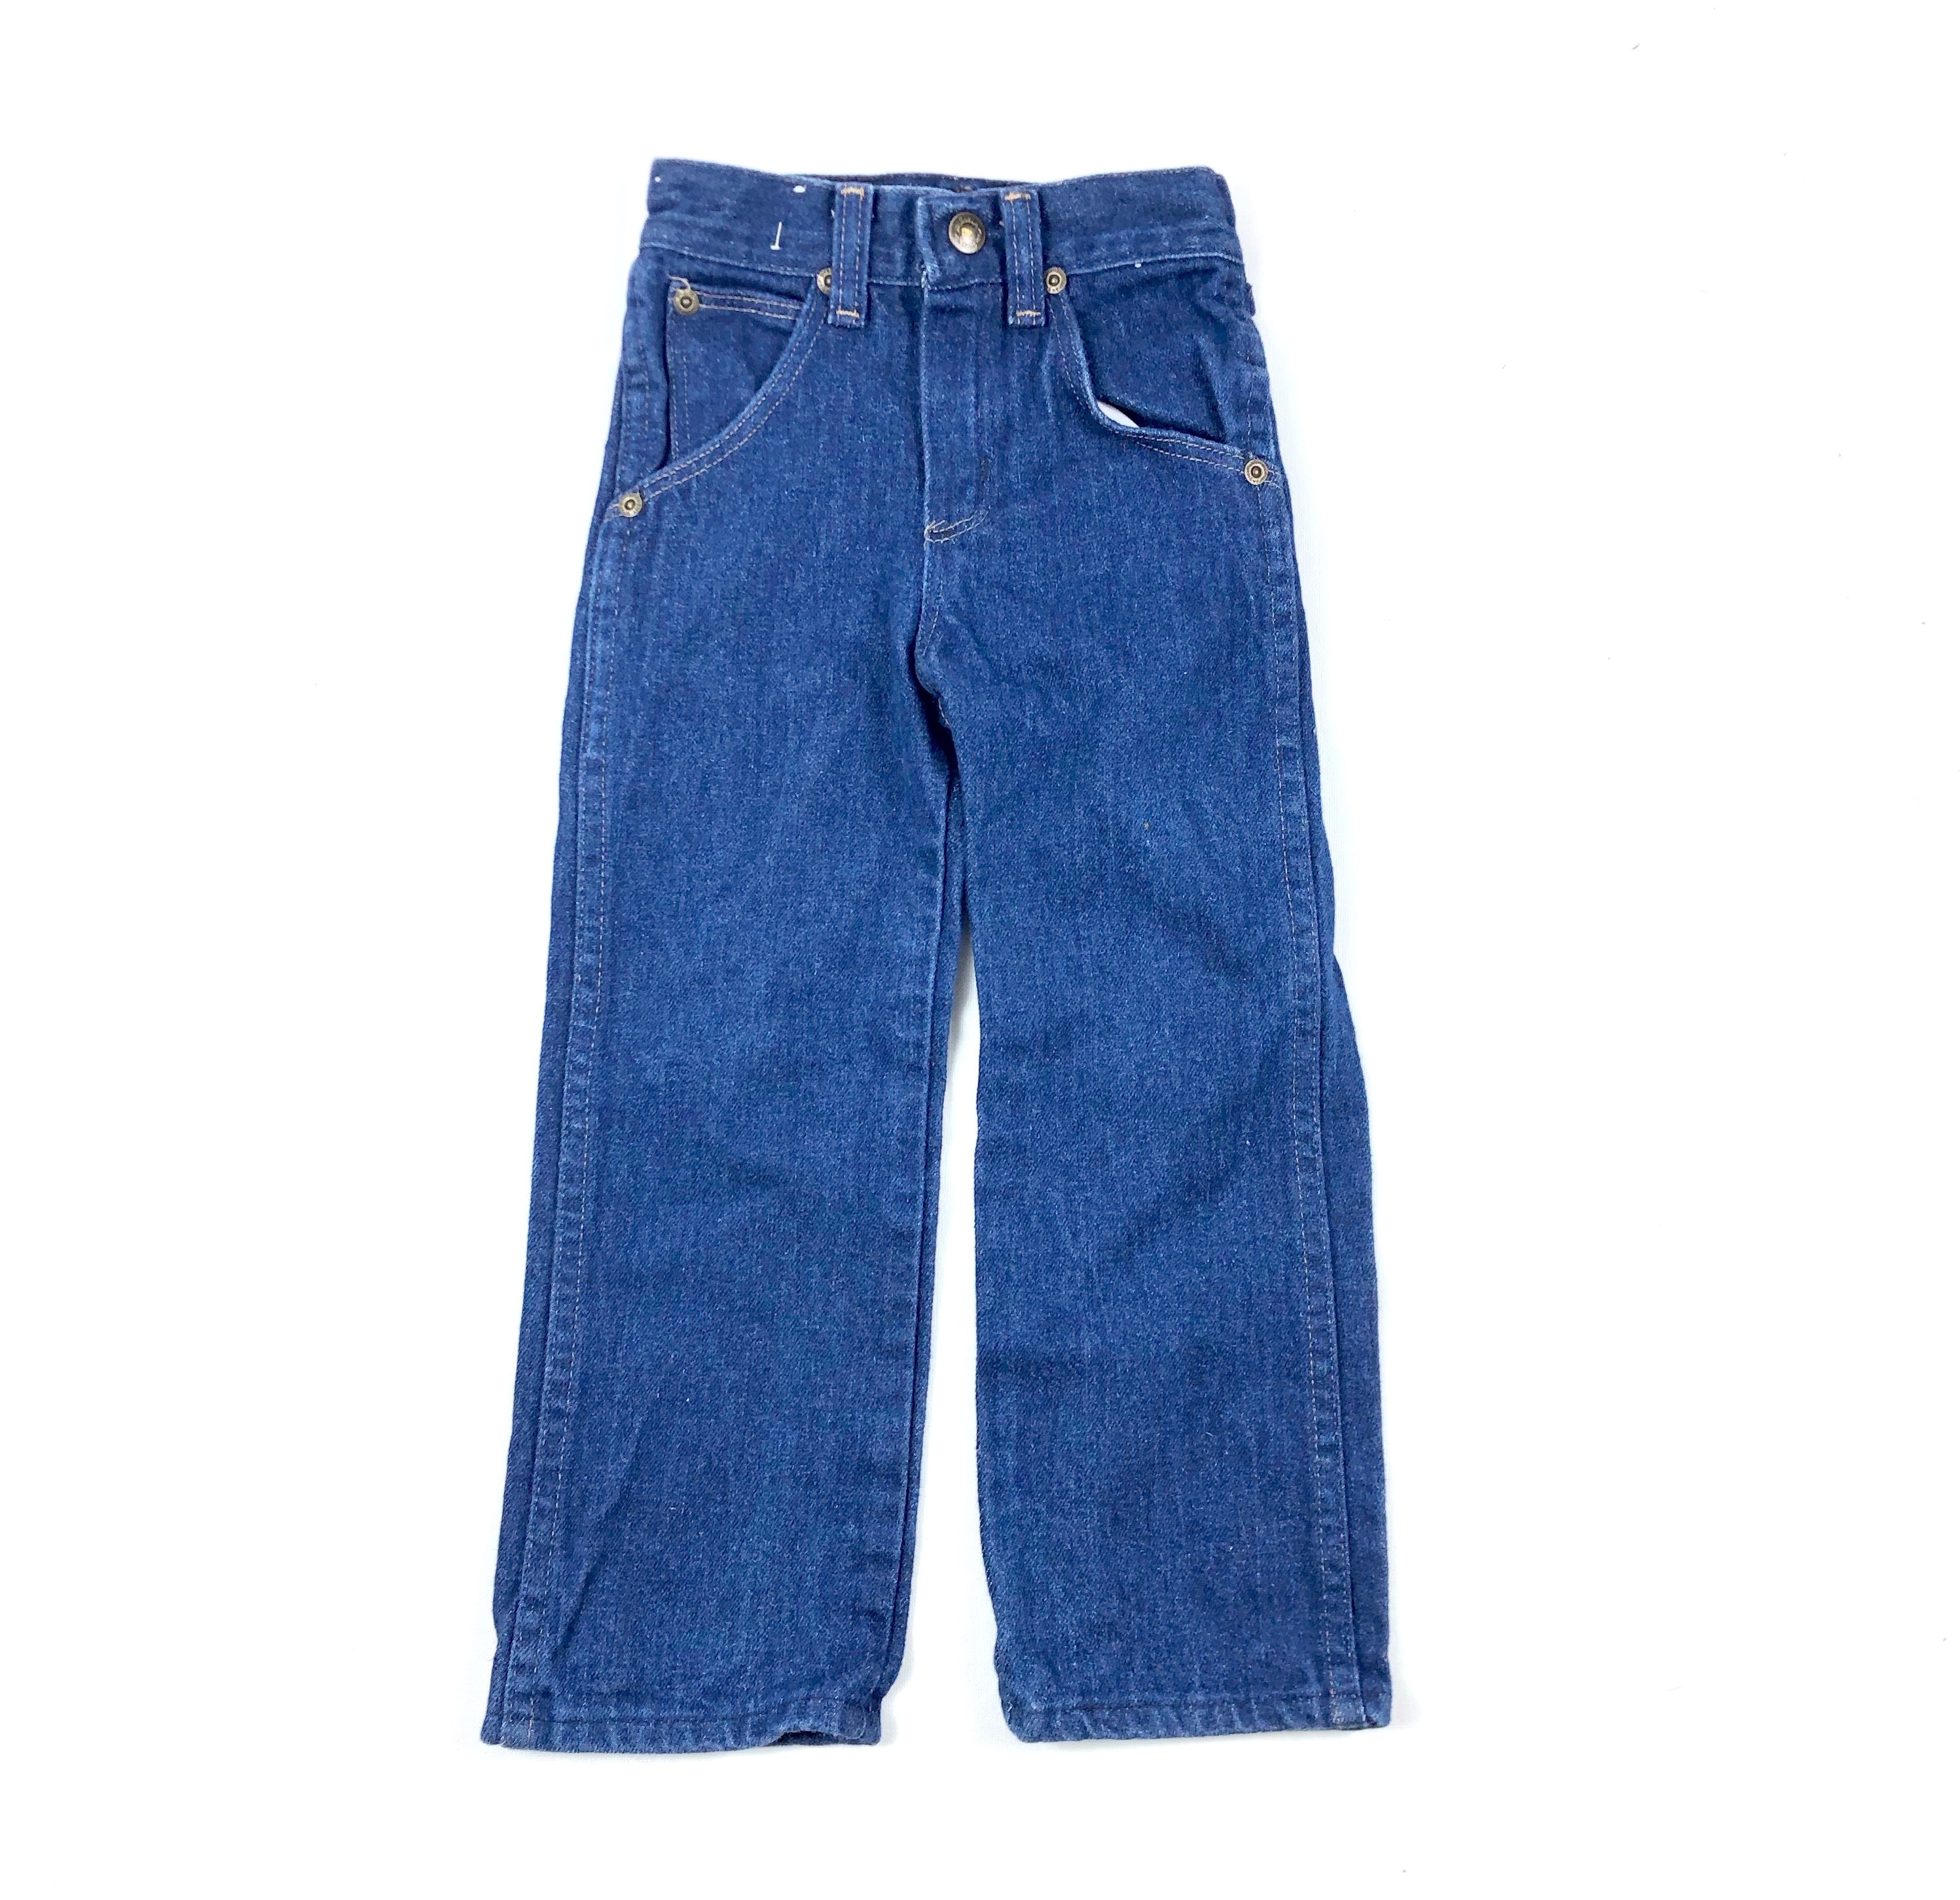 Wrangler kids denim jeans vintage kids dark blue indigo | Etsy